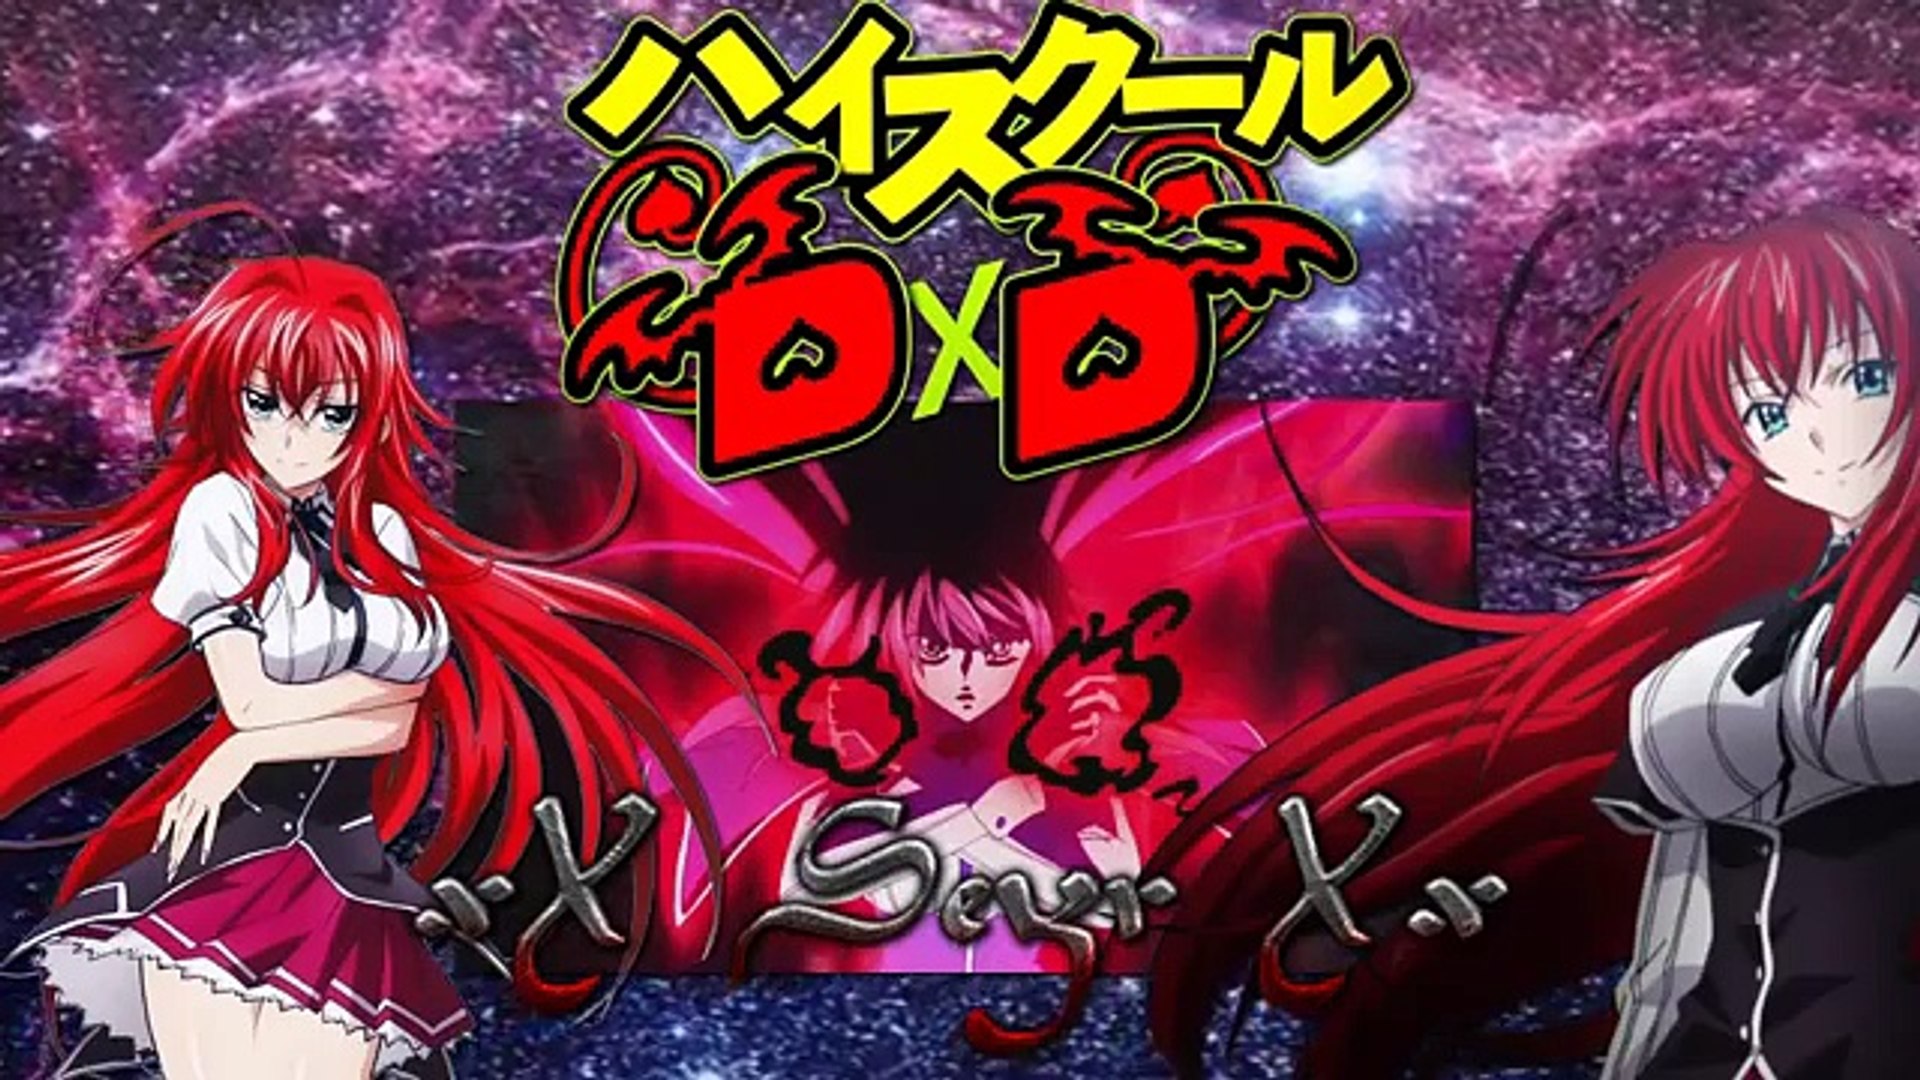 4 temporada de high school dxd Hero para 2018 - Anime News - Vídeo  Dailymotion